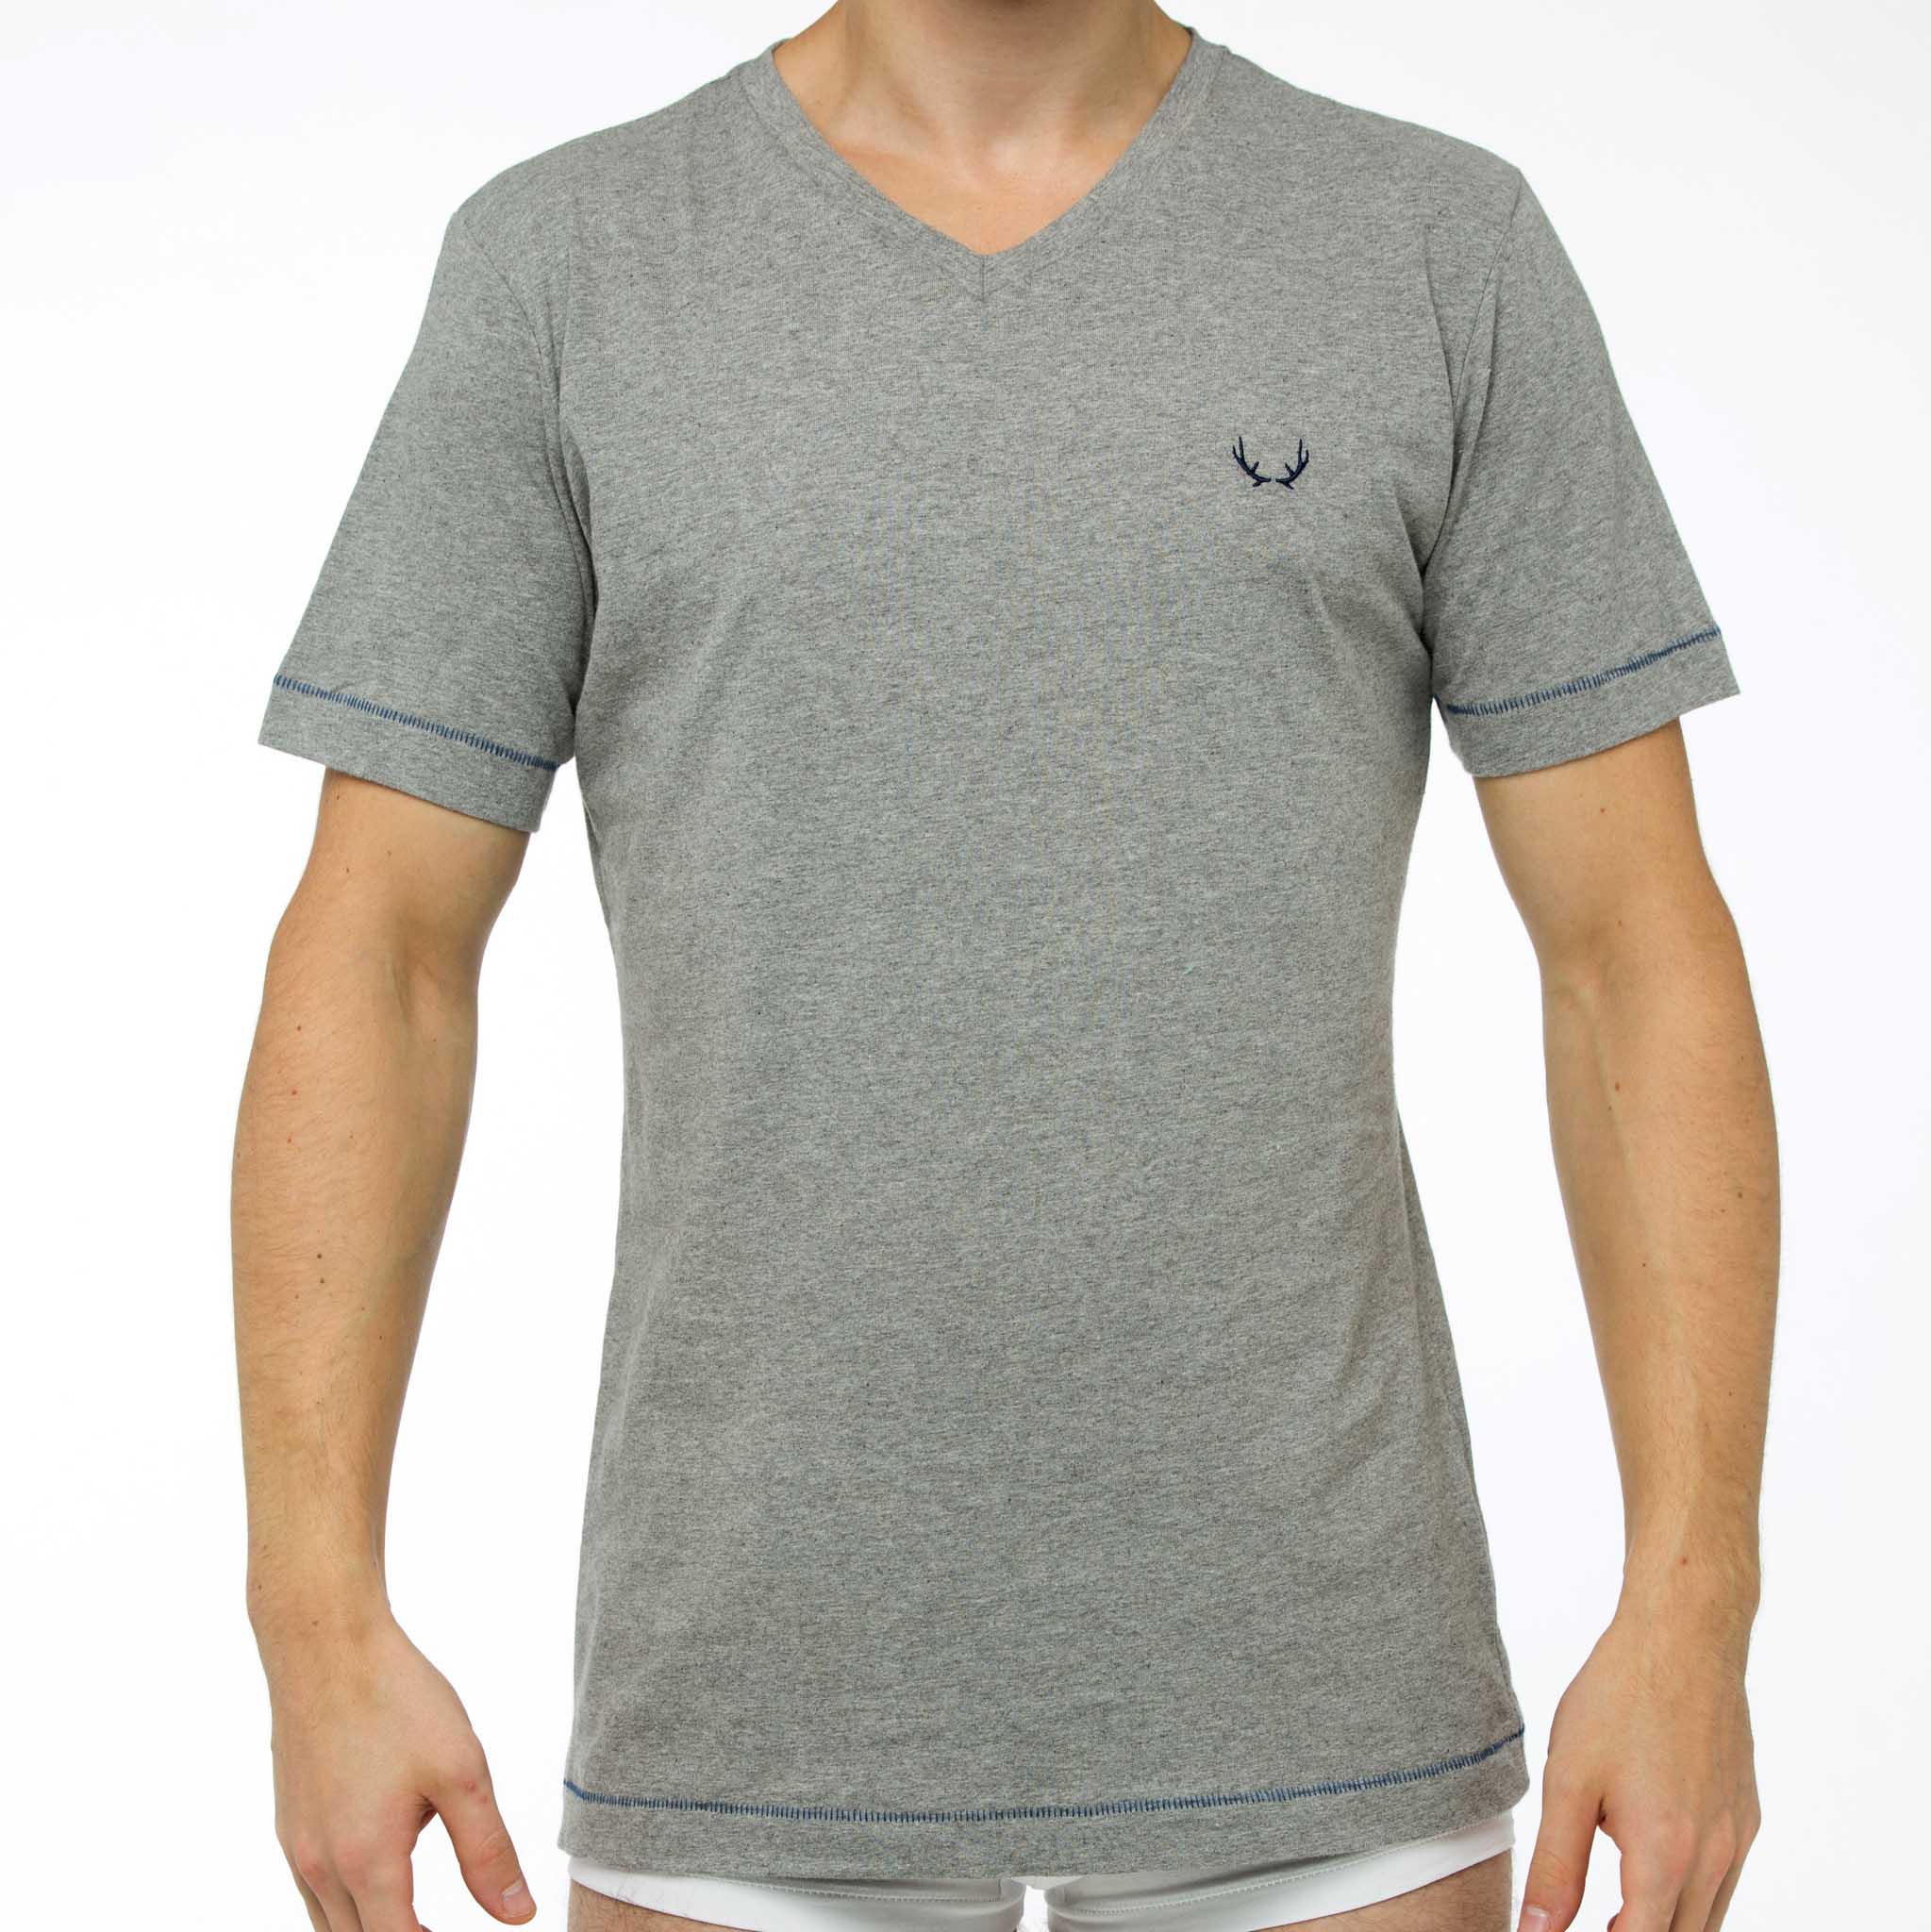 Gray organic cotton T-shirt from Bluebuck